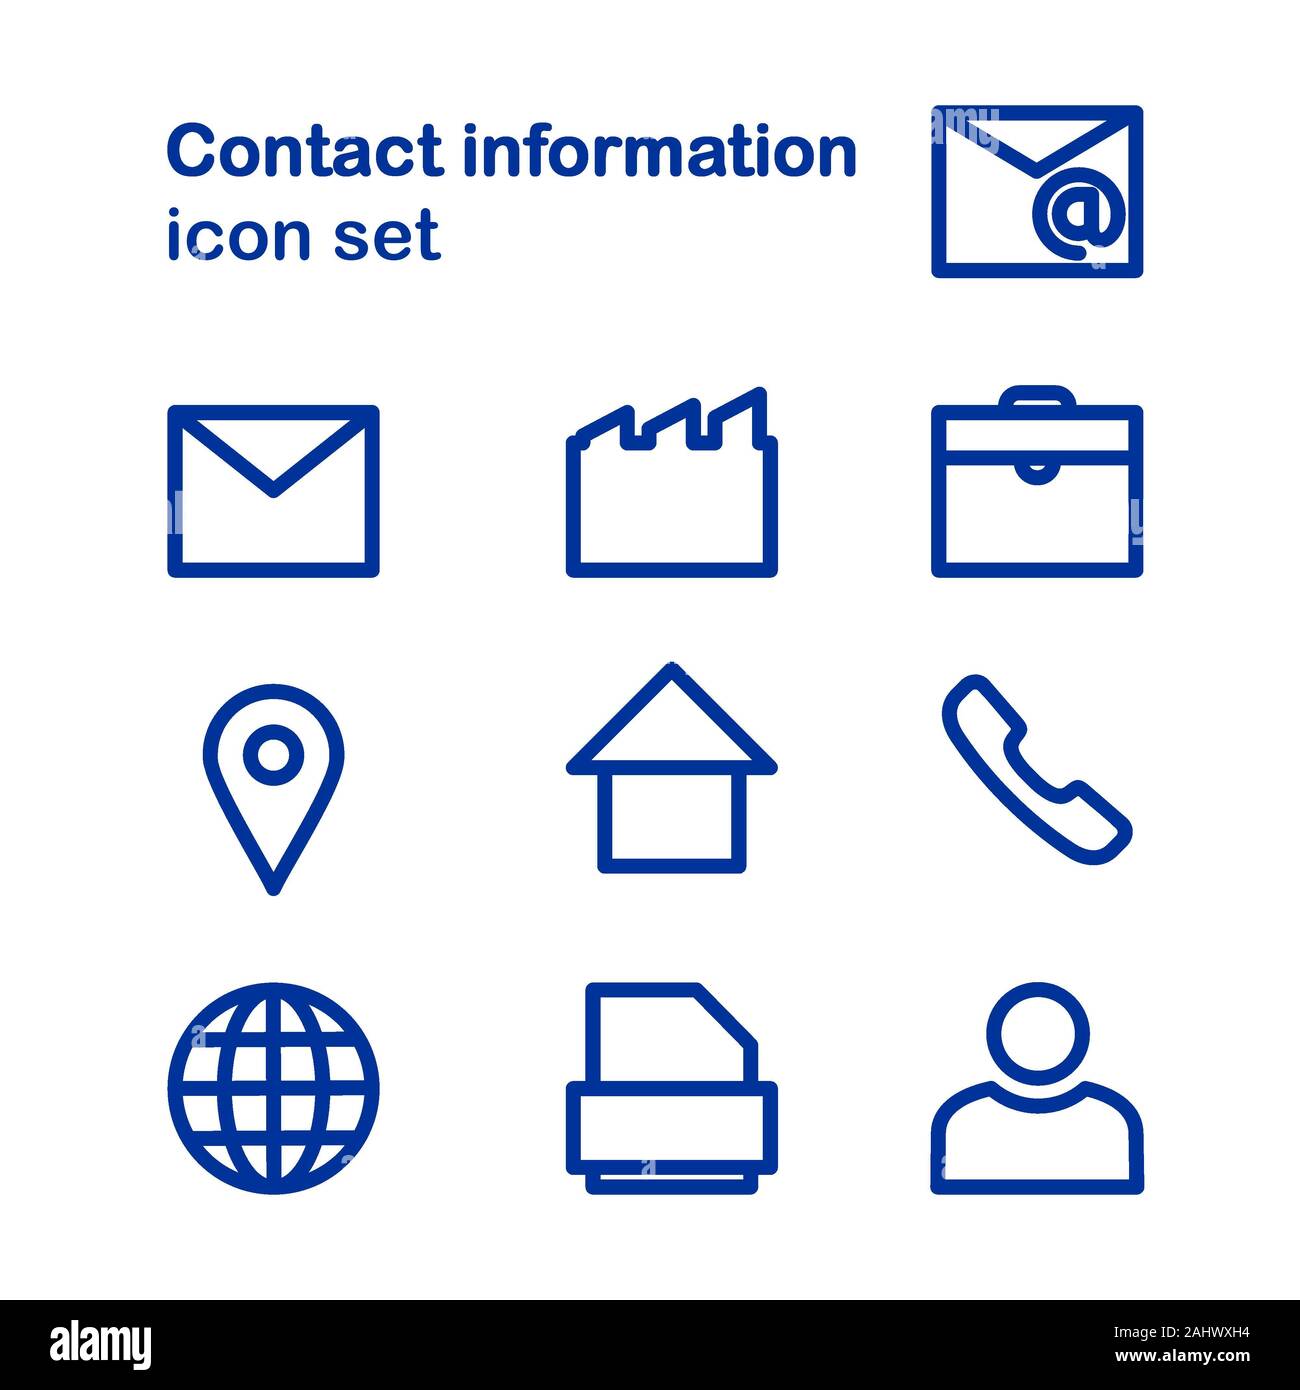 Eine Reihe von Kontaktinformationen Symbole. Tasten vektor Icon Set. Kommunikation Symbols Collection, Vektor Skizzen. E-Mail, Adresse, home, user, Telefon, Tel. Stockfoto